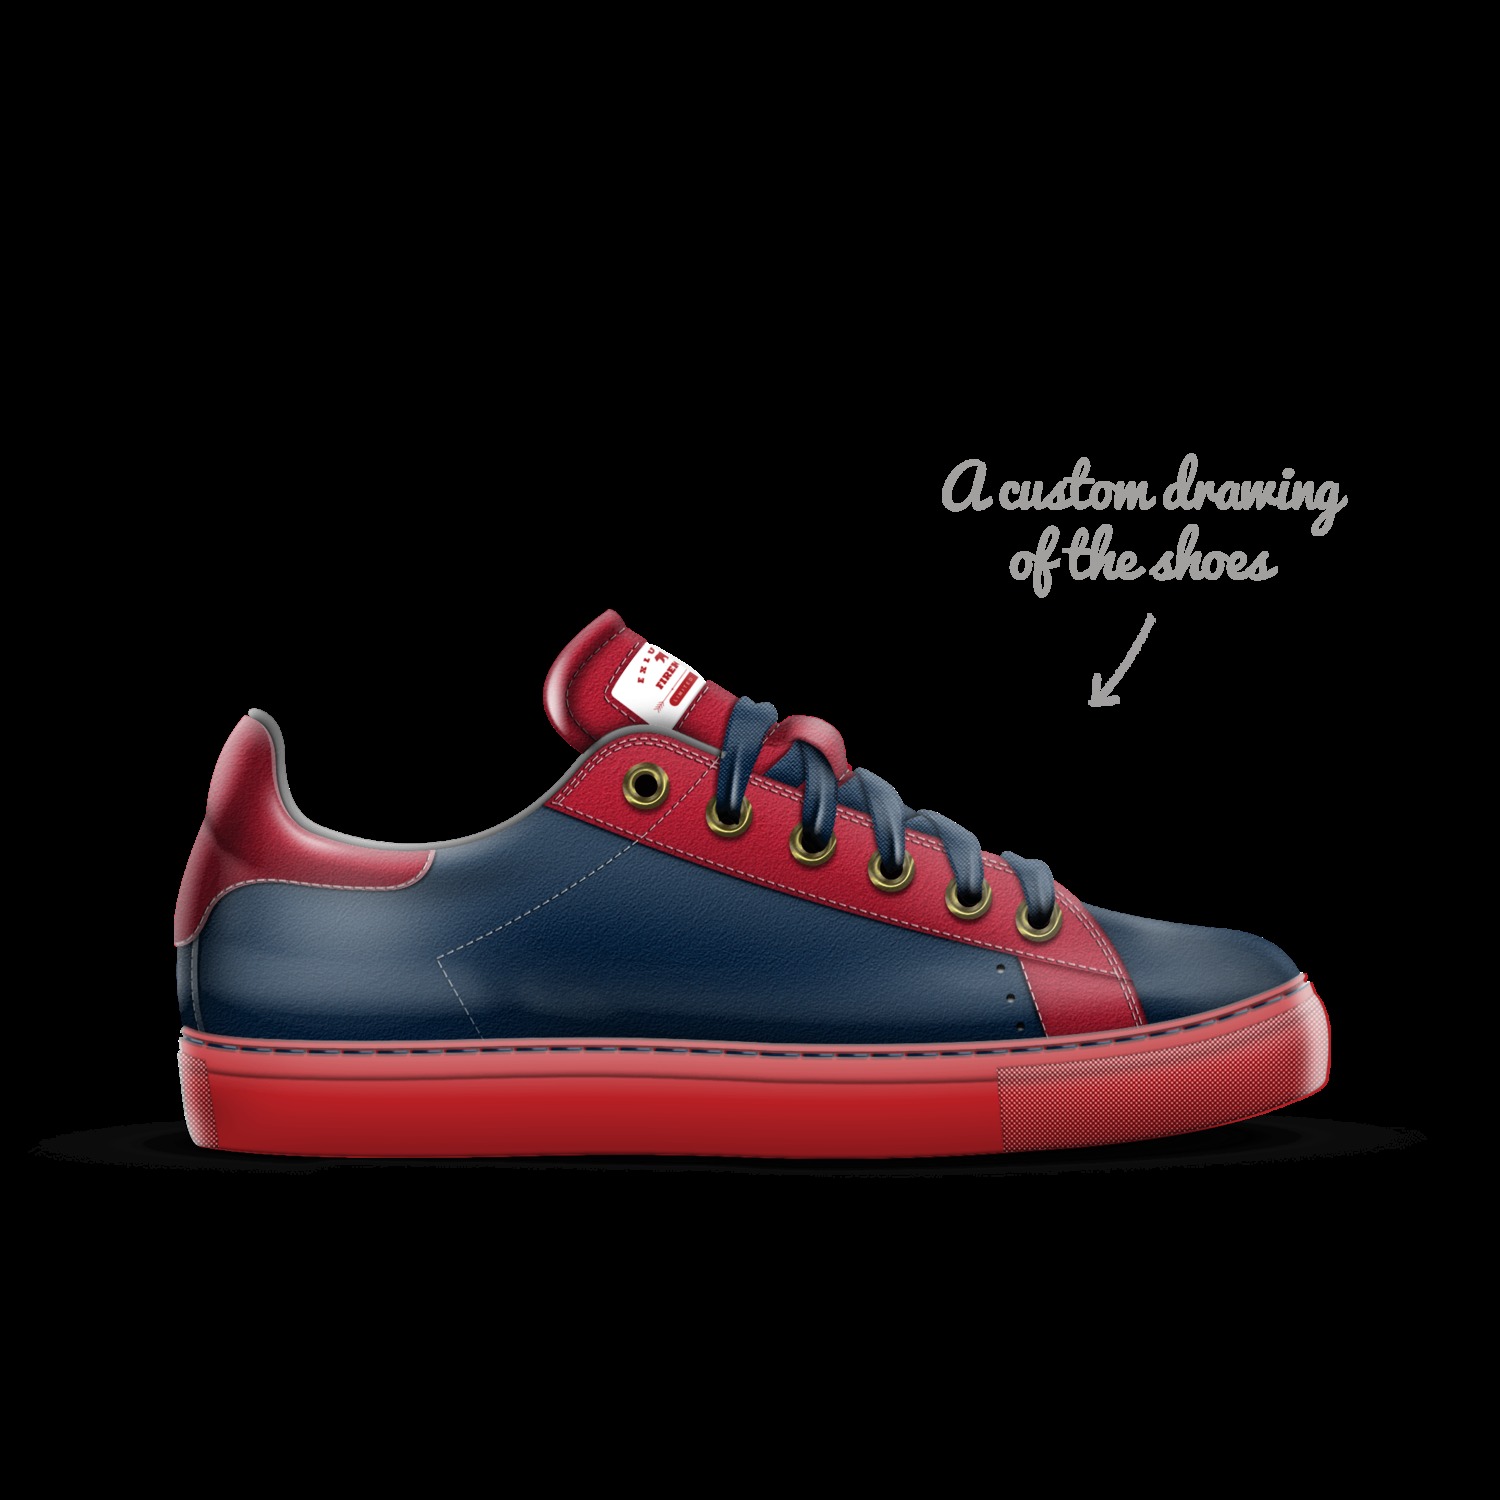 A Custom Shoe concept by Stijn Hellmann